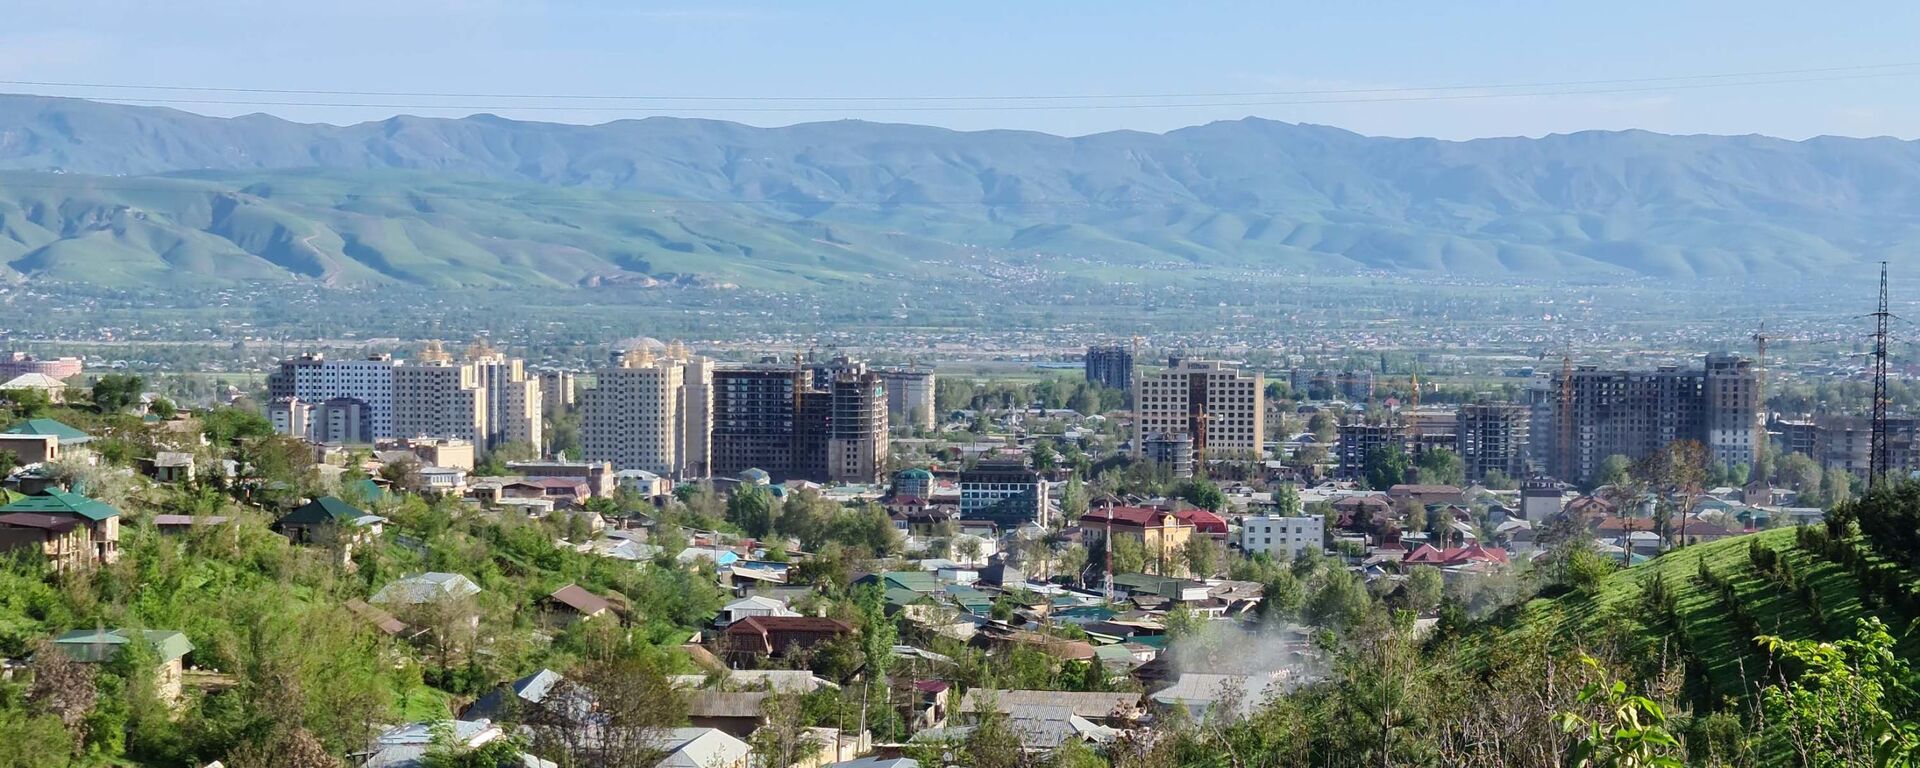 Панорама города Душанбе - Sputnik Тоҷикистон, 1920, 15.07.2020